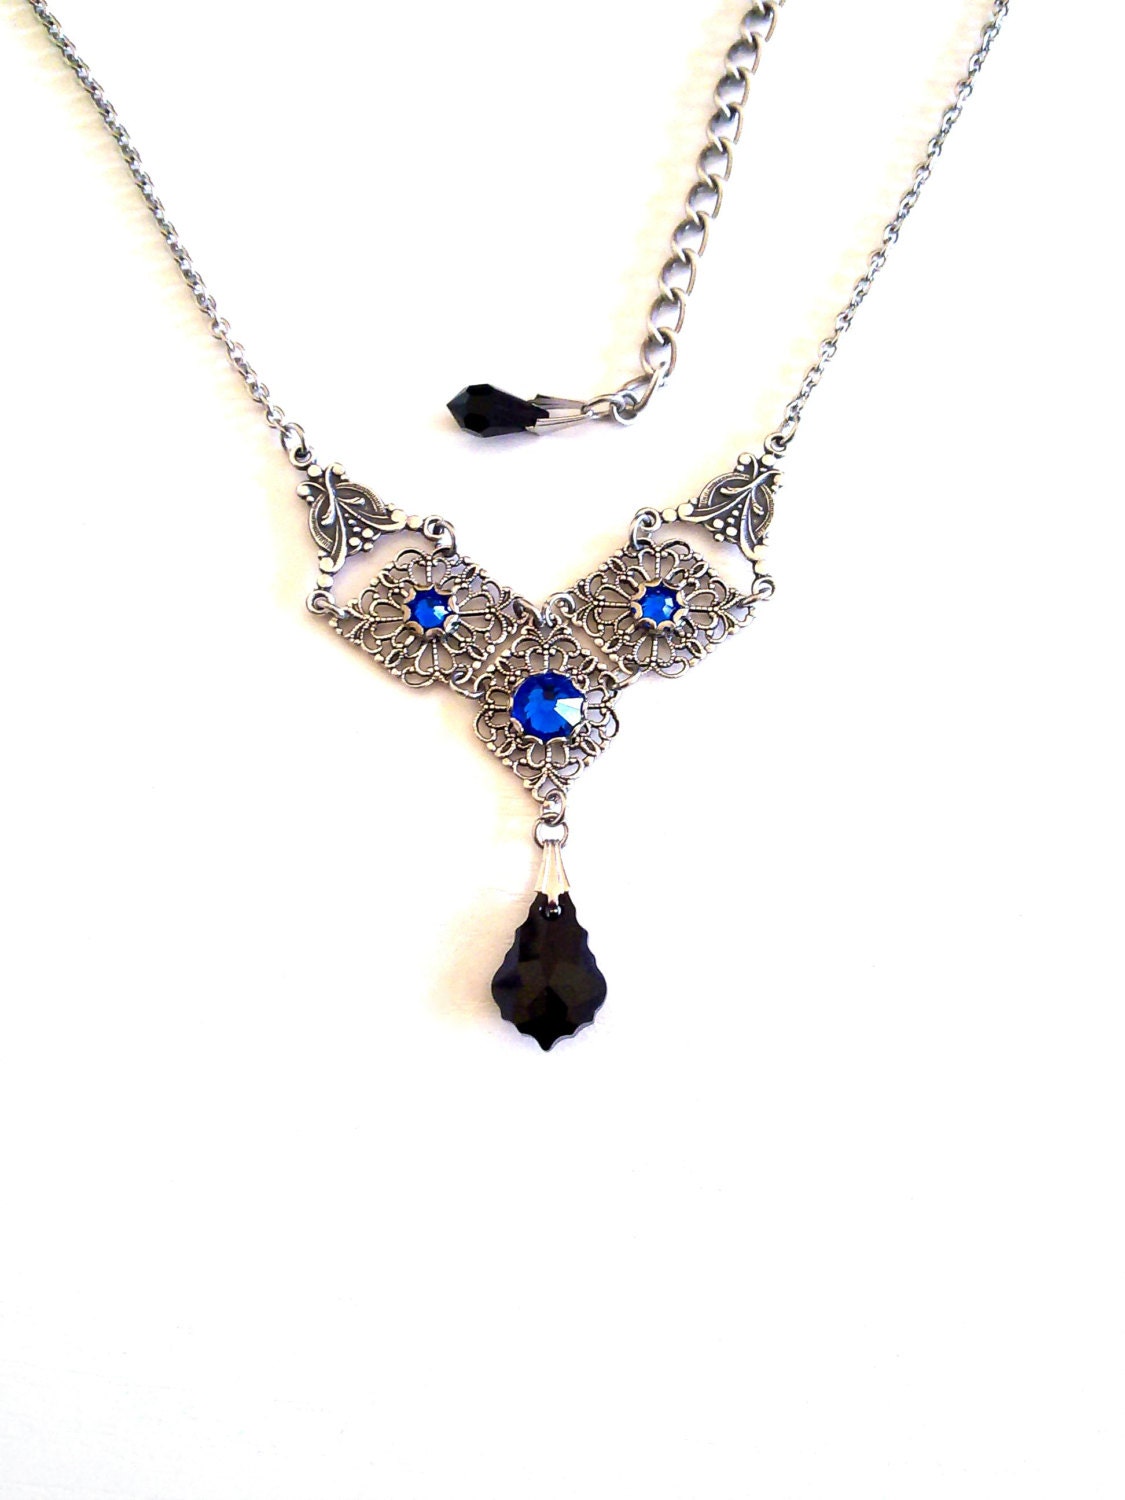 Victorian Gothic Filigree Necklace with Black & Blue Swarovski